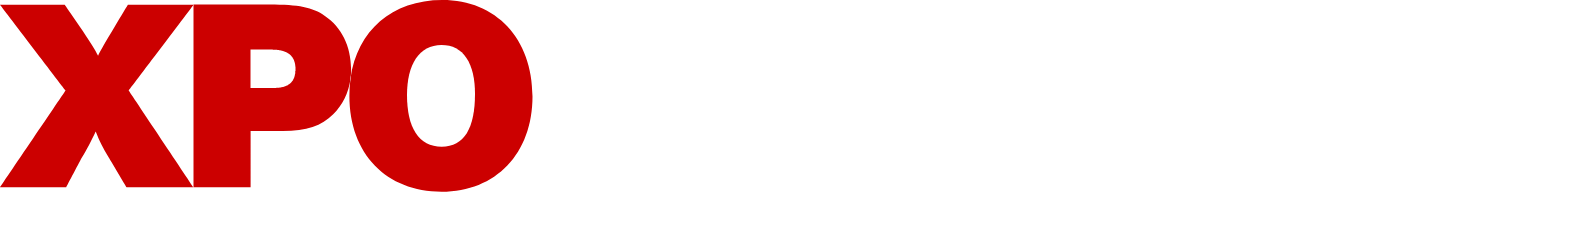 XPO Logistics Logo groß für dunkle Hintergründe (transparentes PNG)